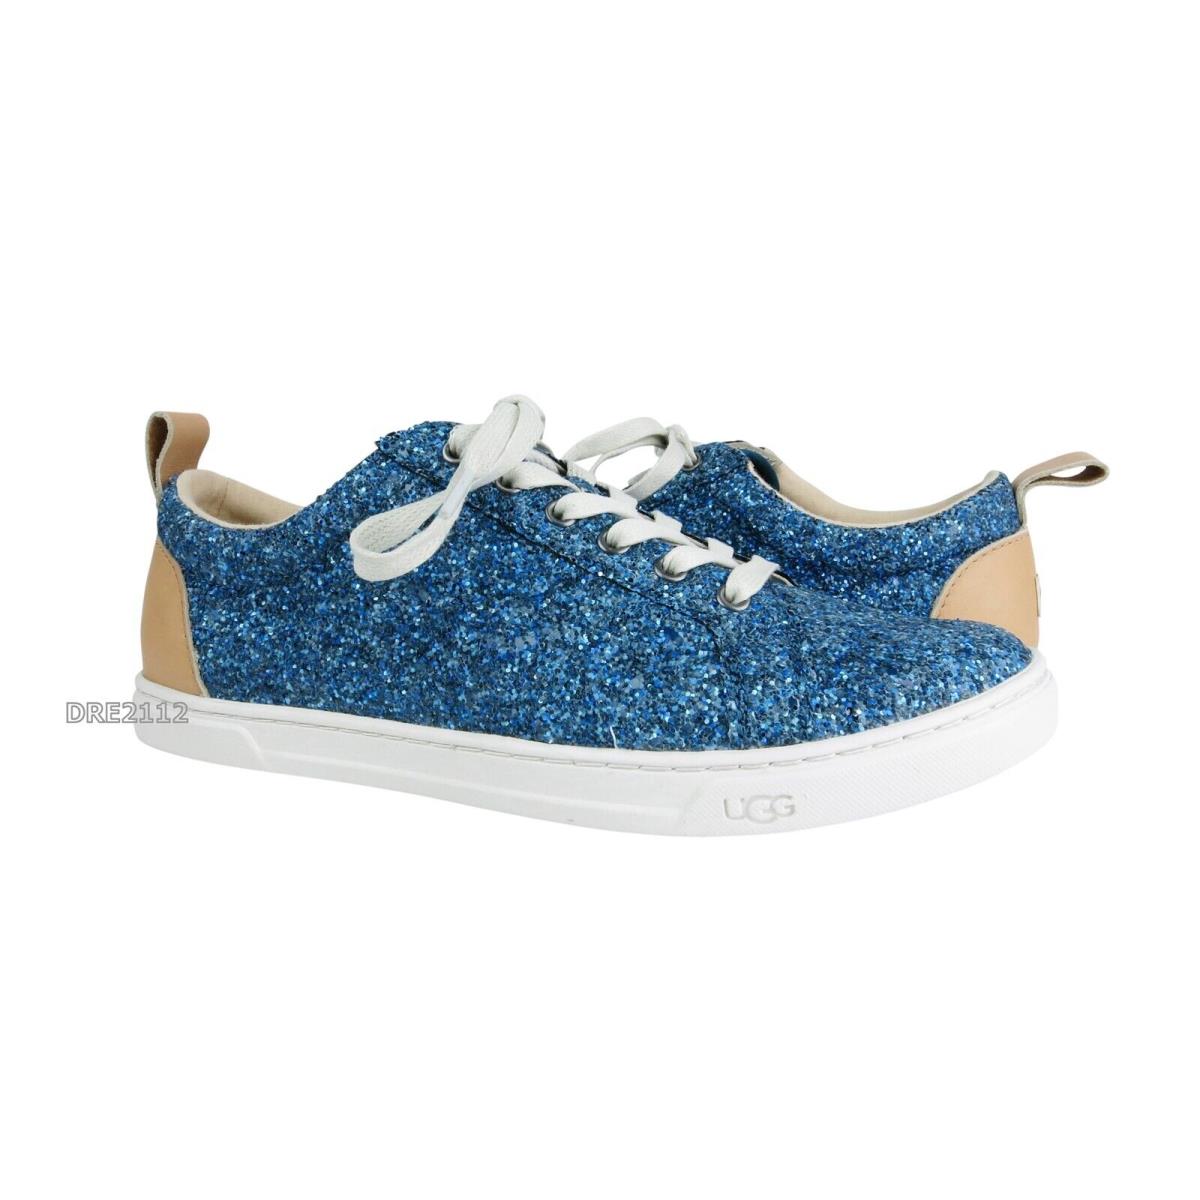 Ugg Karine Chunky Glitter Blue Multi Gold Slip-on Sneakers Womens Size 10 -nib - Blue